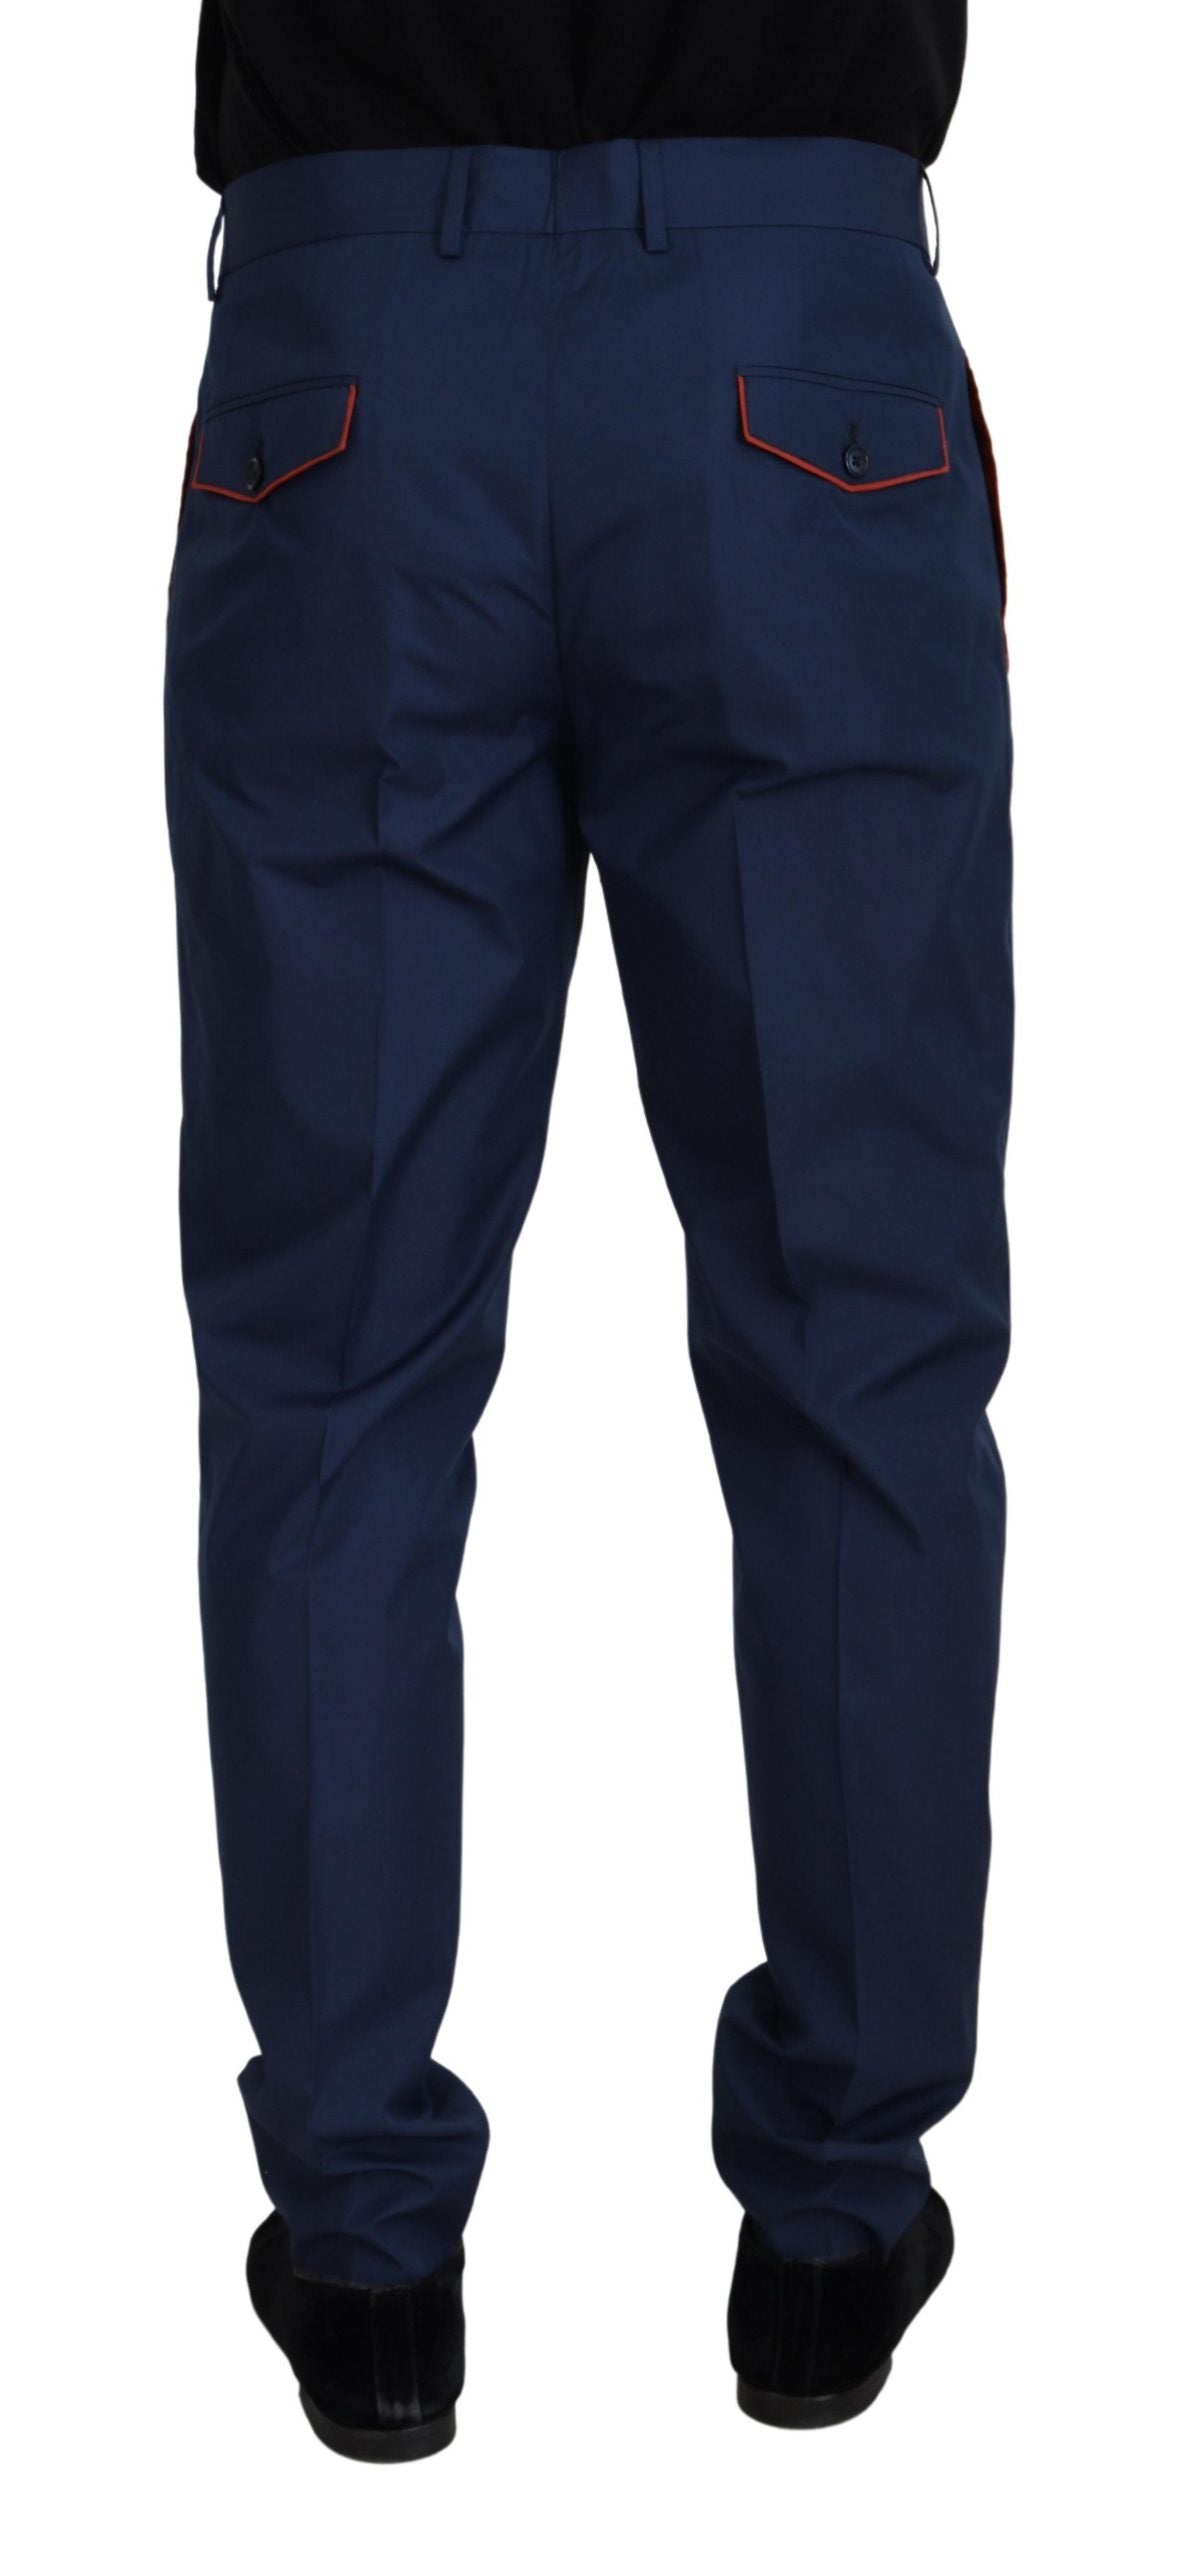 Dolce & Gabbana Blue Cotton Silk Trousers Chinos Pants